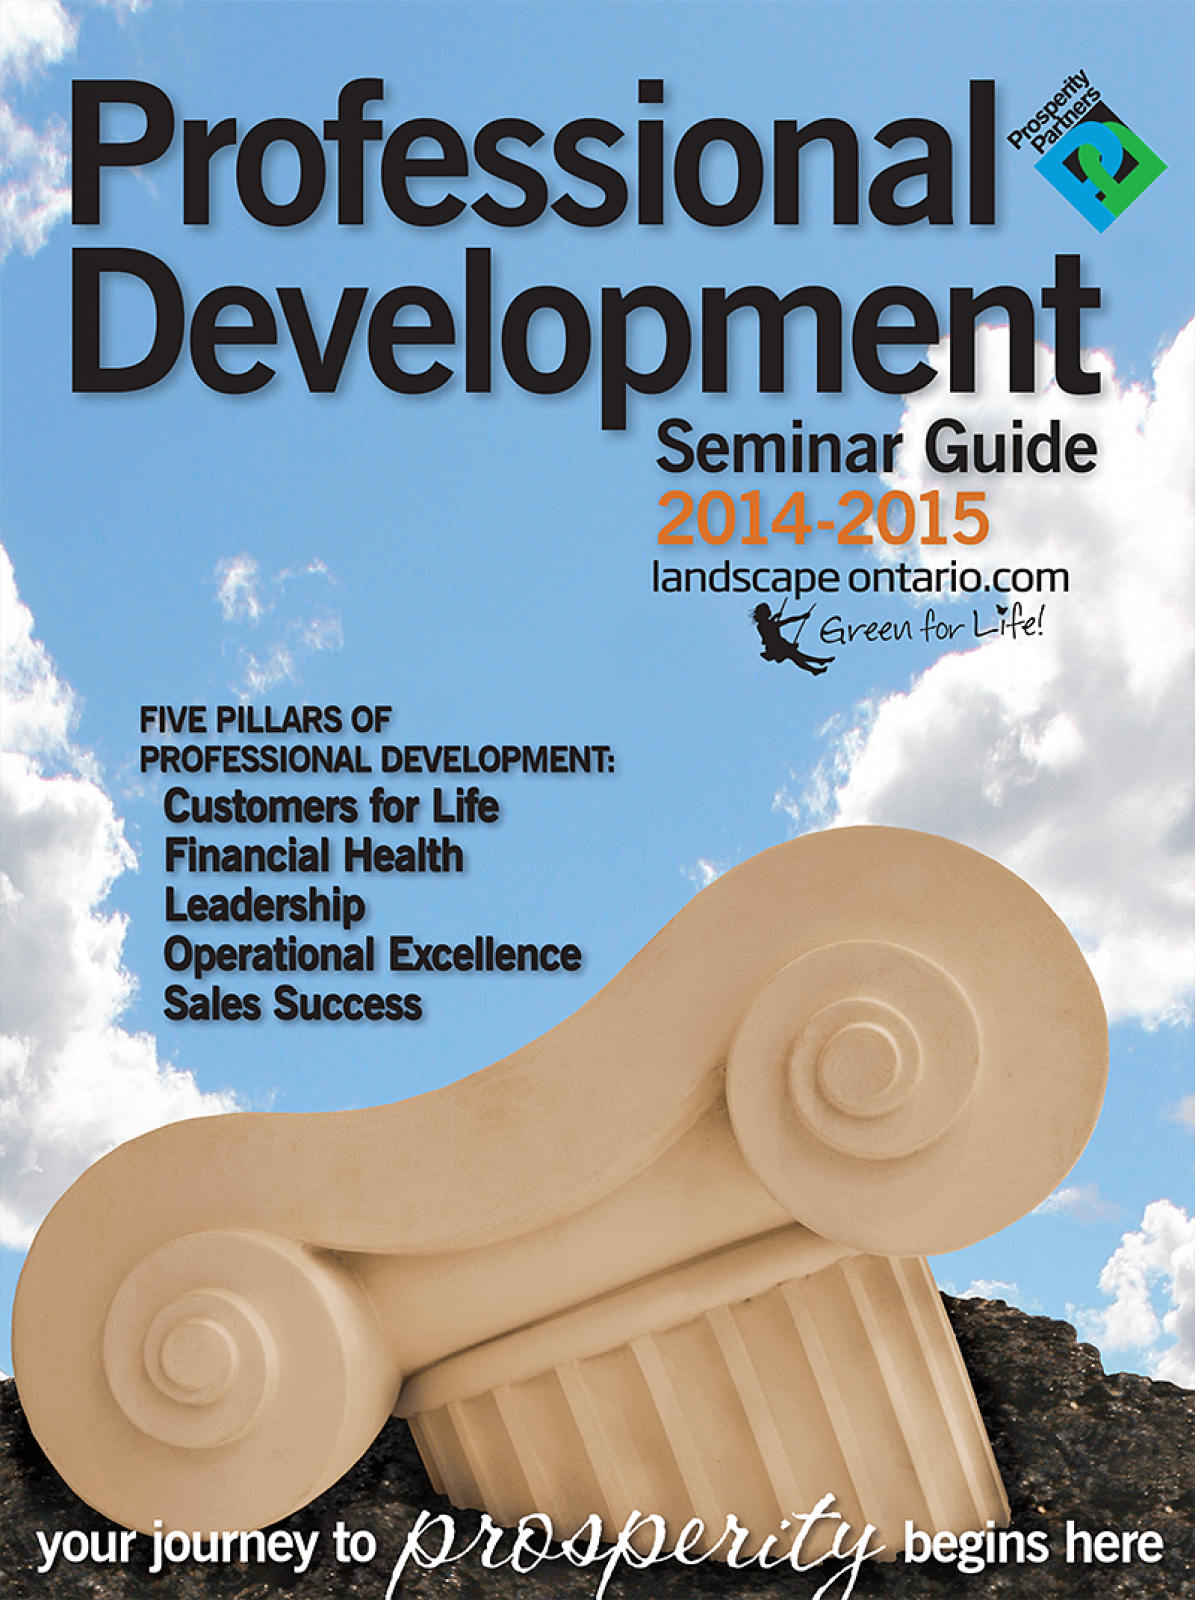 Professional Development Seminar Guide 2014-2015